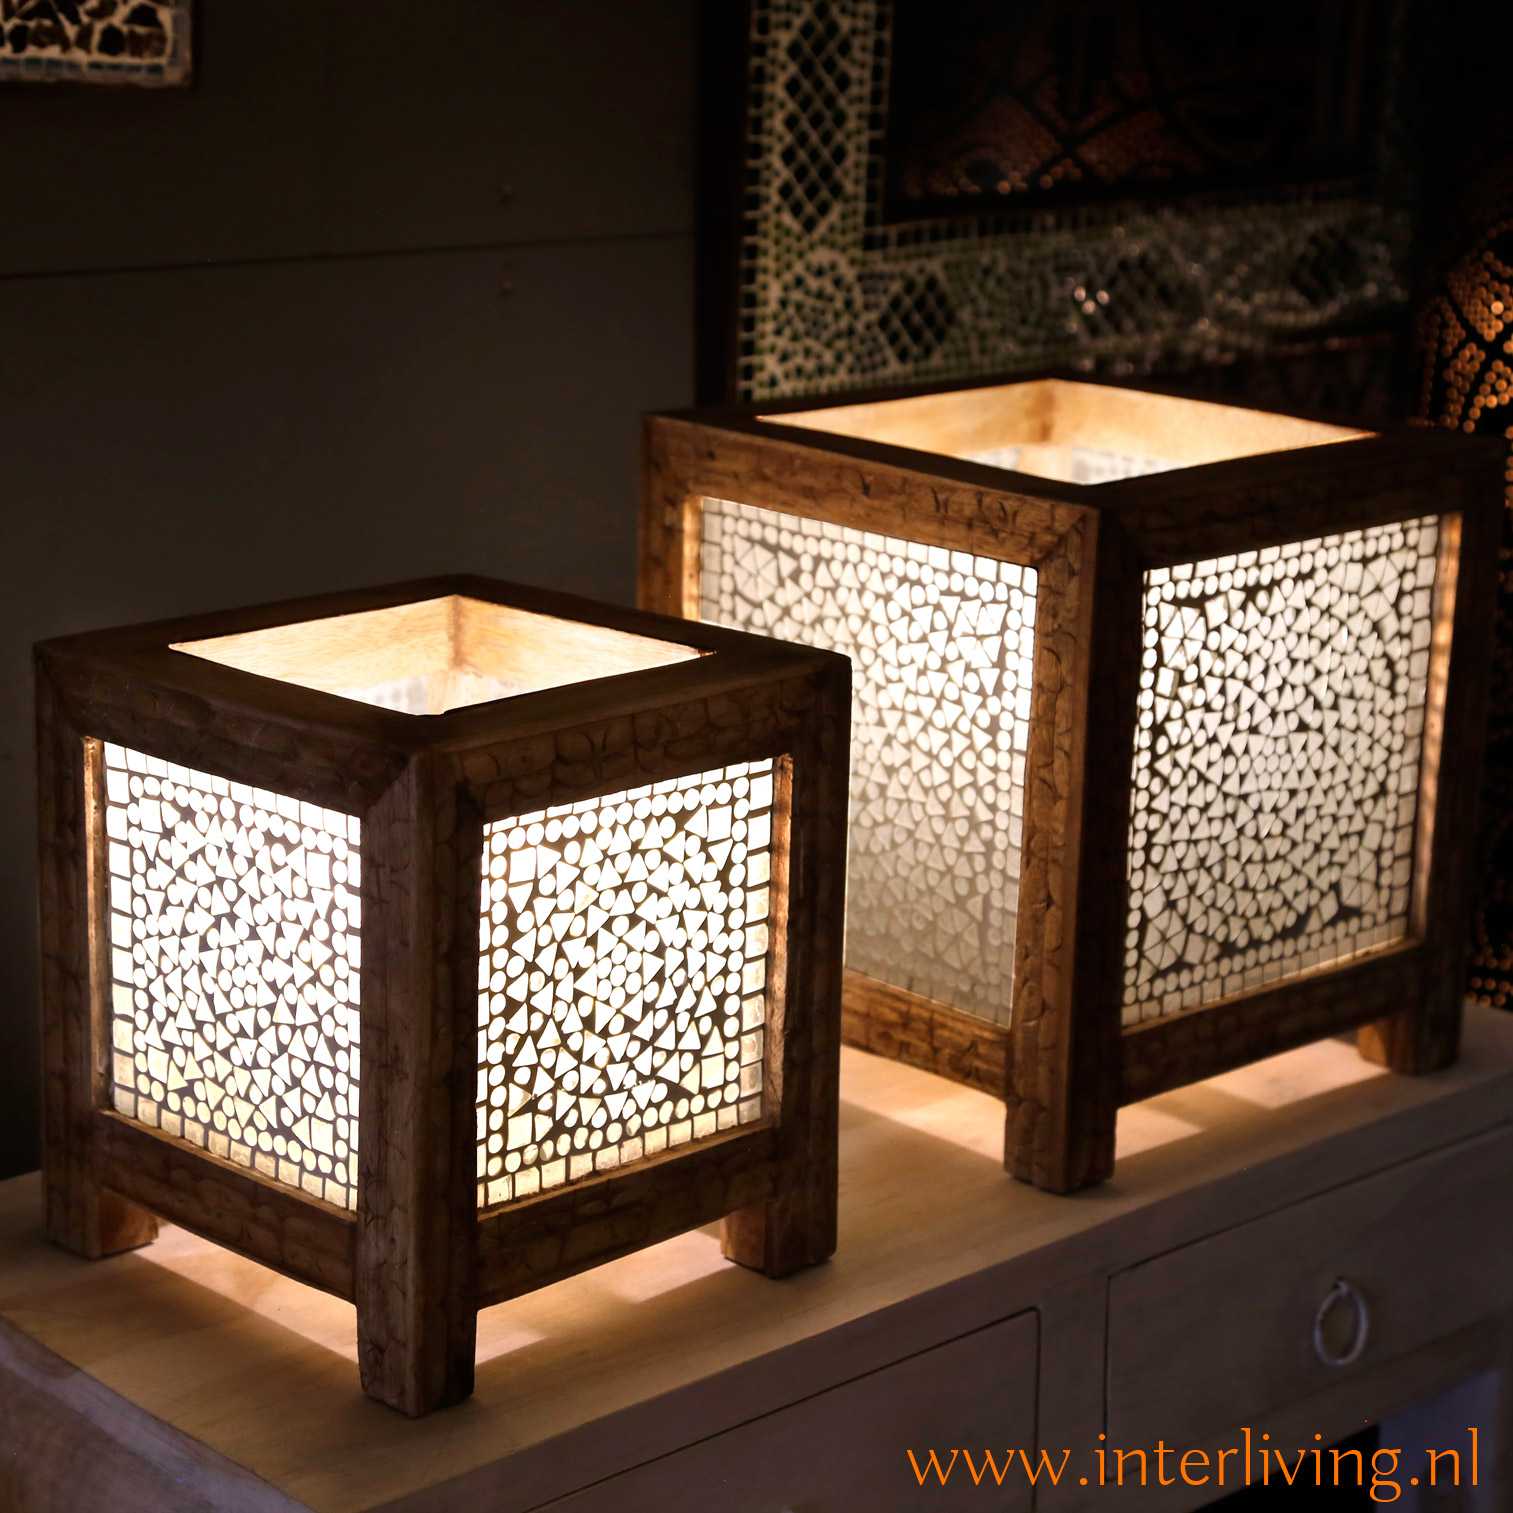 Tafellamp "La bella Luz" vierkant houten model - frame met houtsnijwerk & wit of gekleurd mozaïek glas - Interliving shop